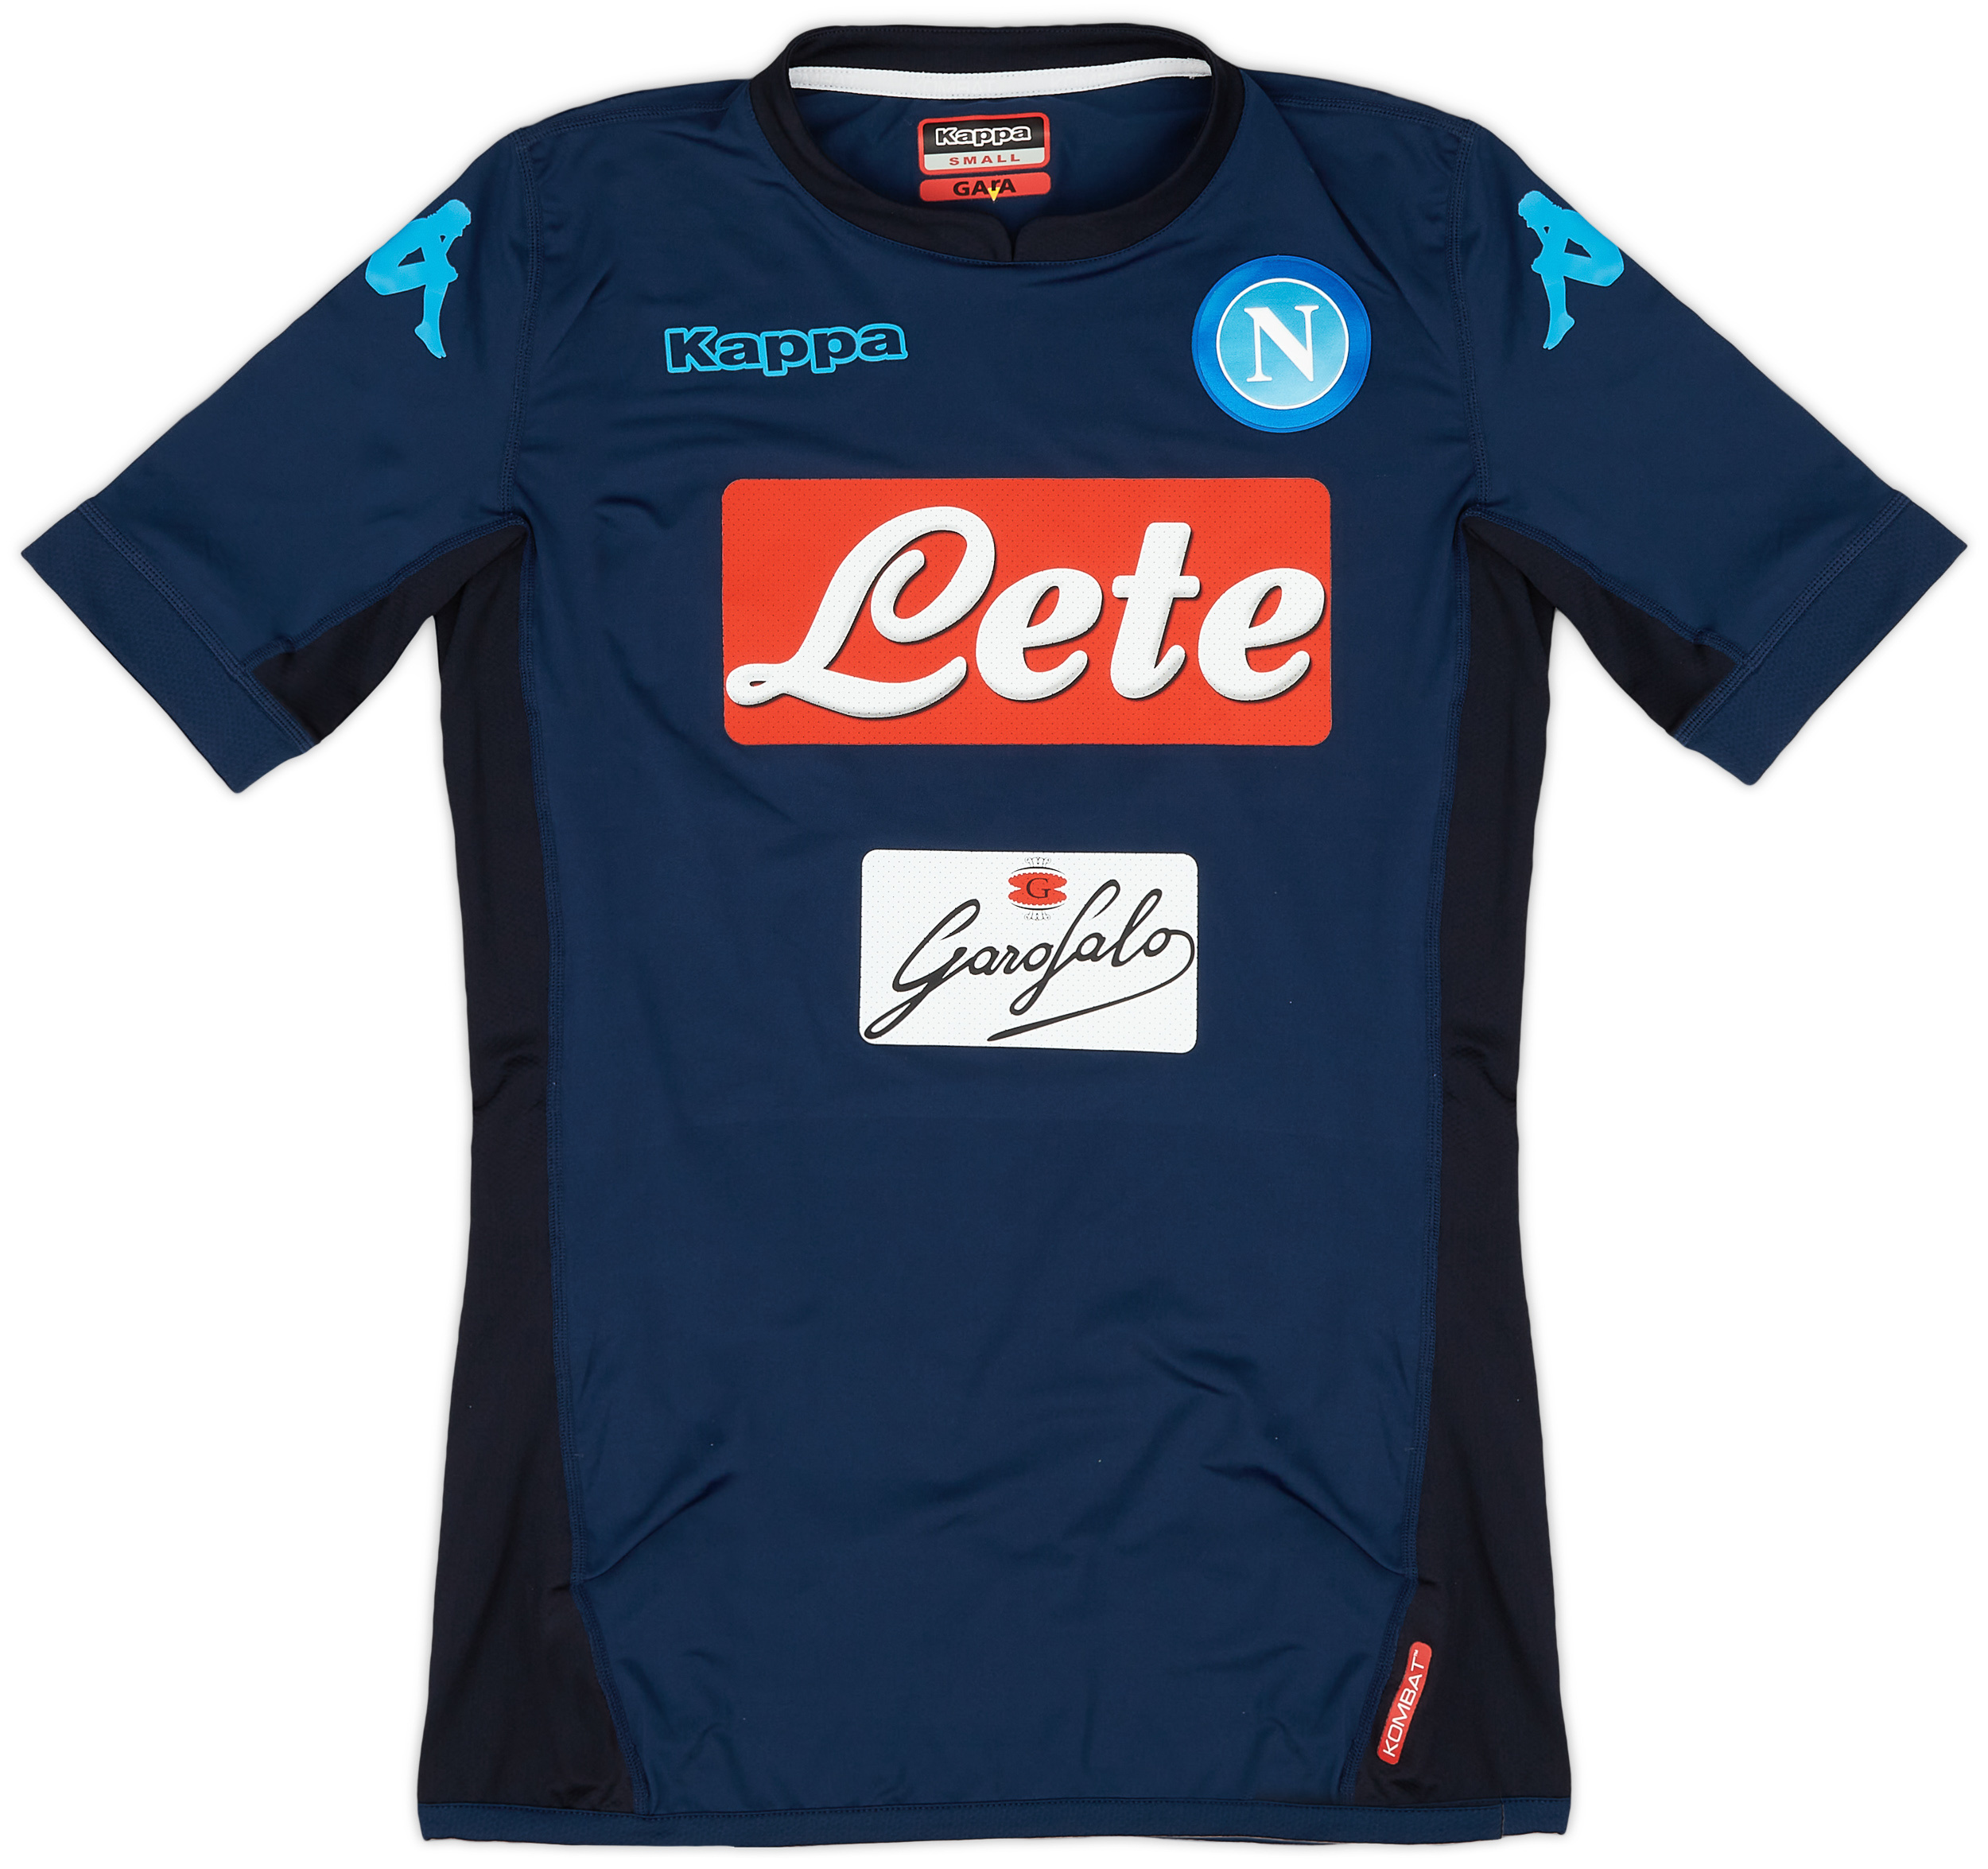 Napoli  שלישית חולצה (Original)